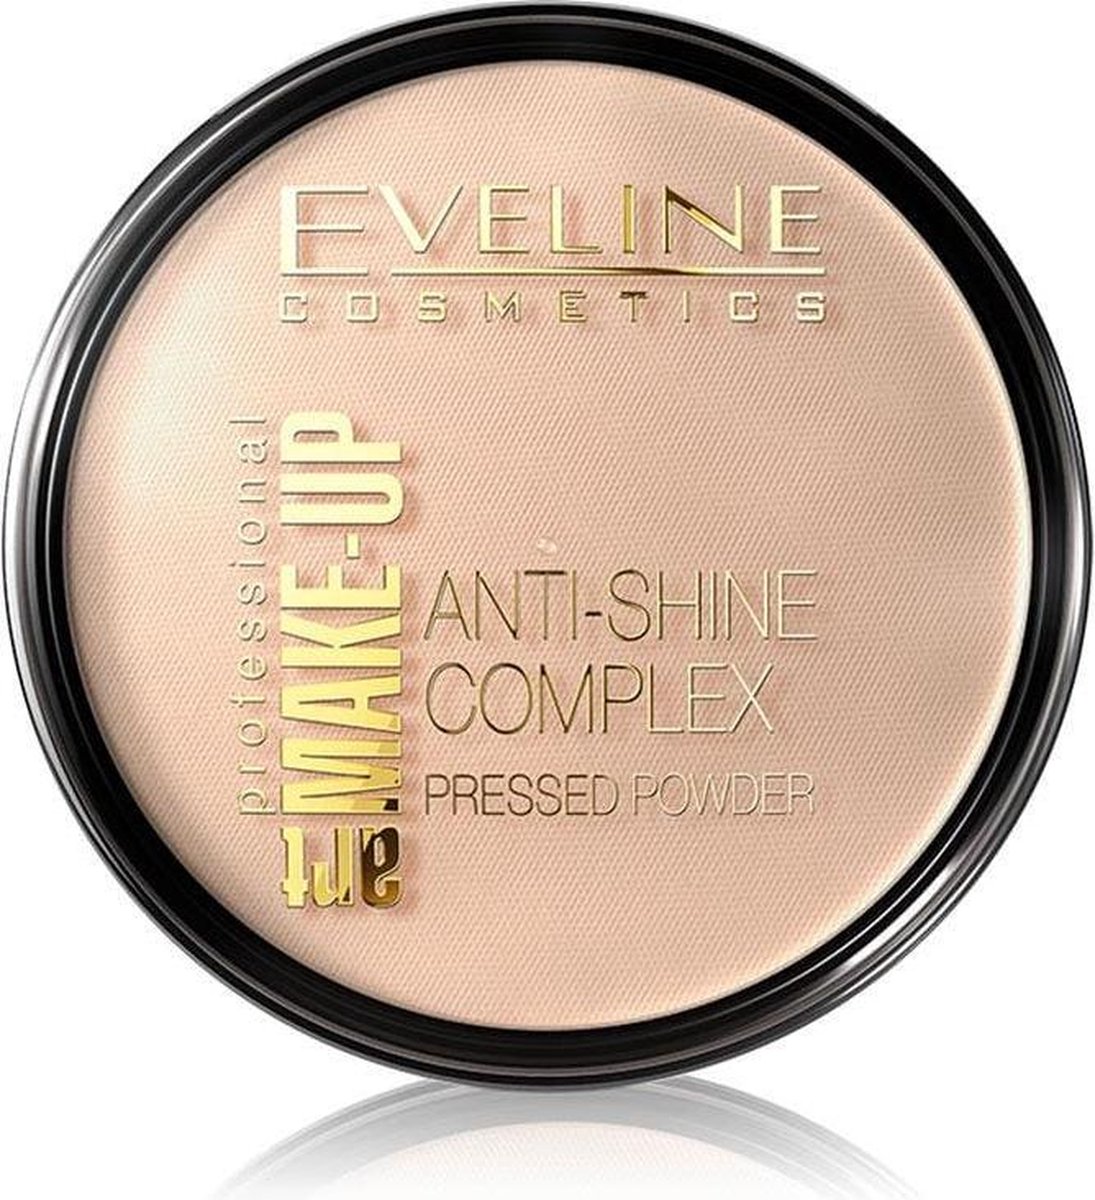 Eveline - Art Make-Up Anti-Shine Complex Pressed Powder matujący puder mineralny z jedwabiem 31 Transparent 14g